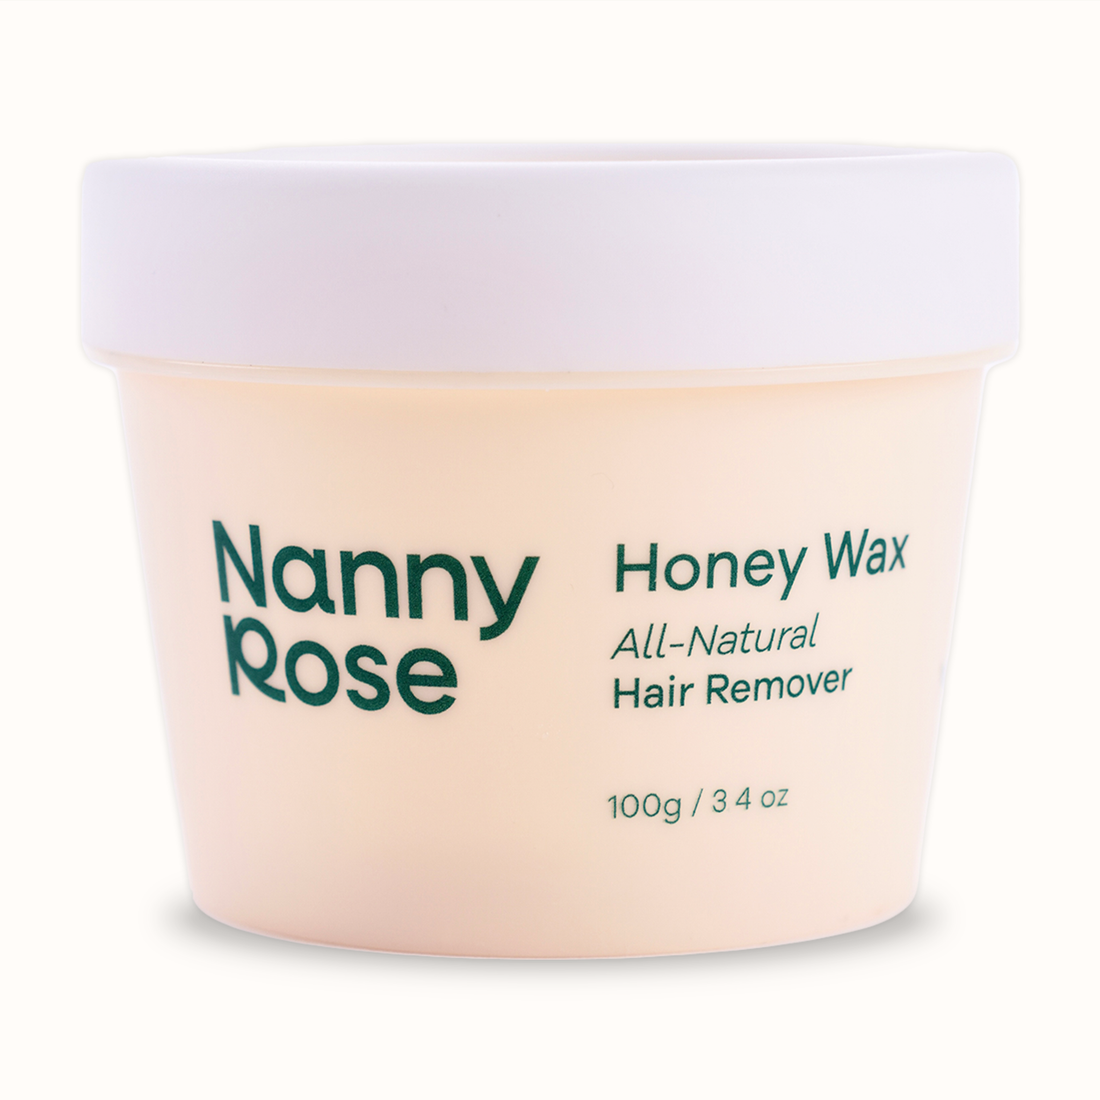 HONEY WAX ALL-NATURAL HAIR REMOVER